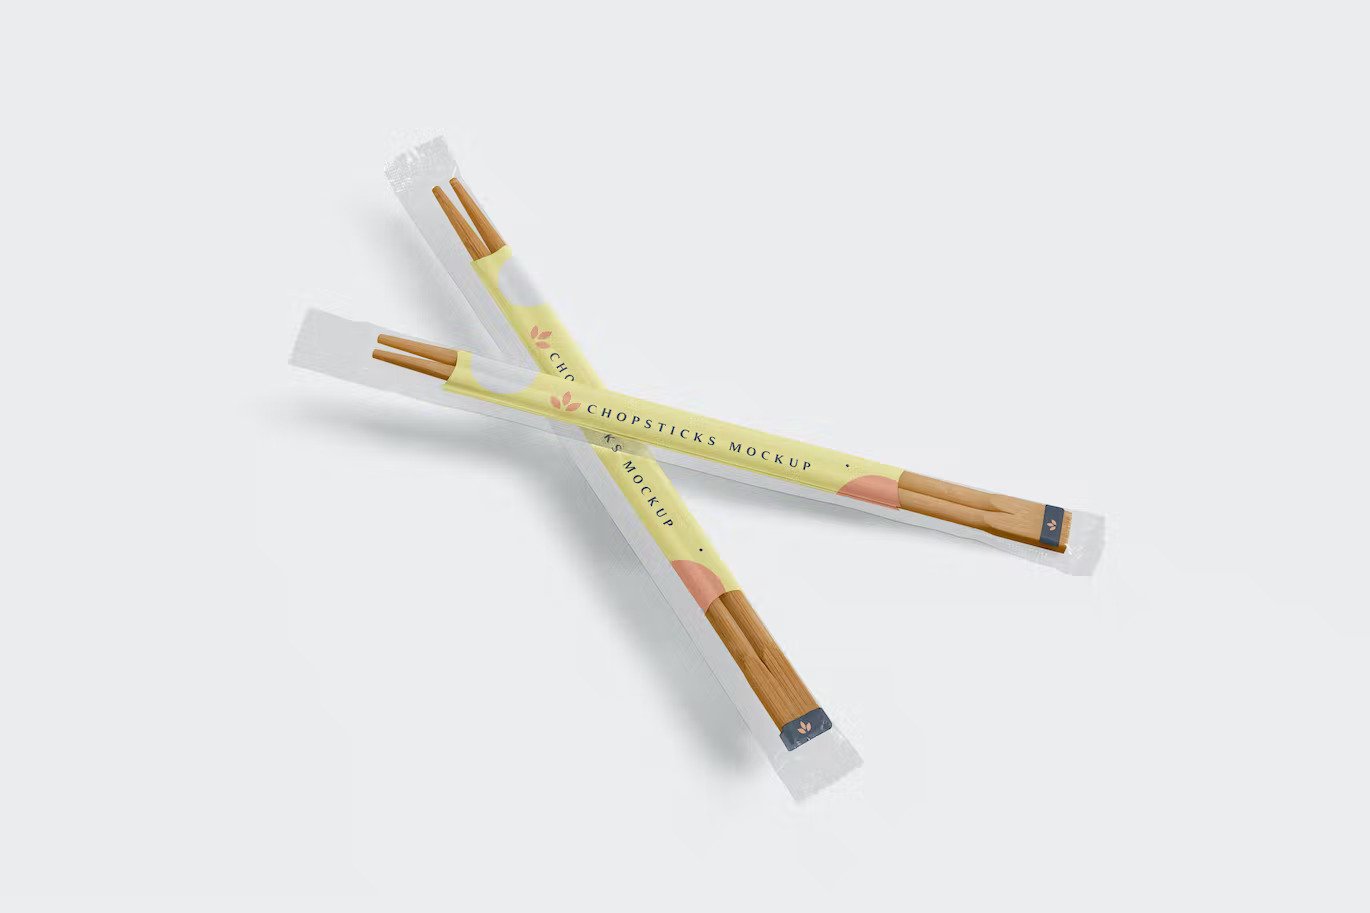 Chopsticks mockup with transparent packaging